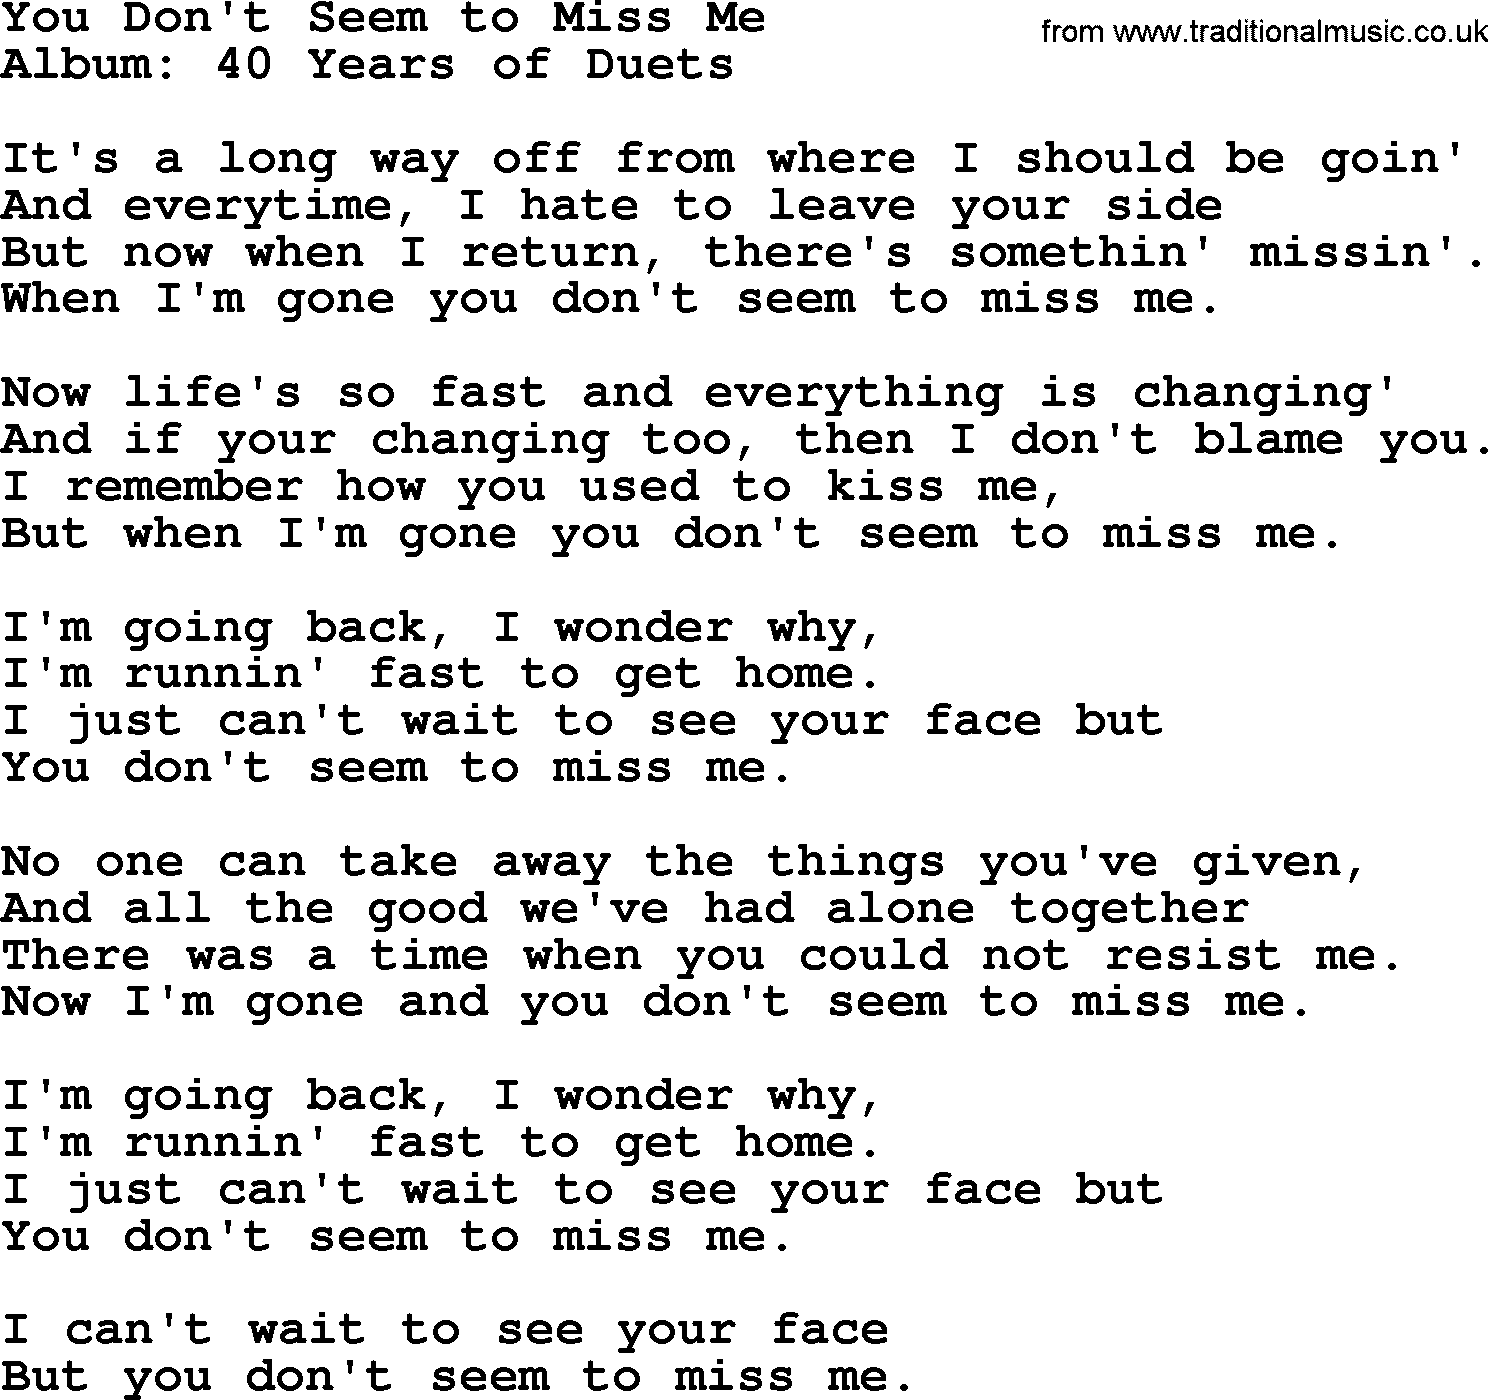 George Jones song: You Don't Seem To Miss Me, lyrics